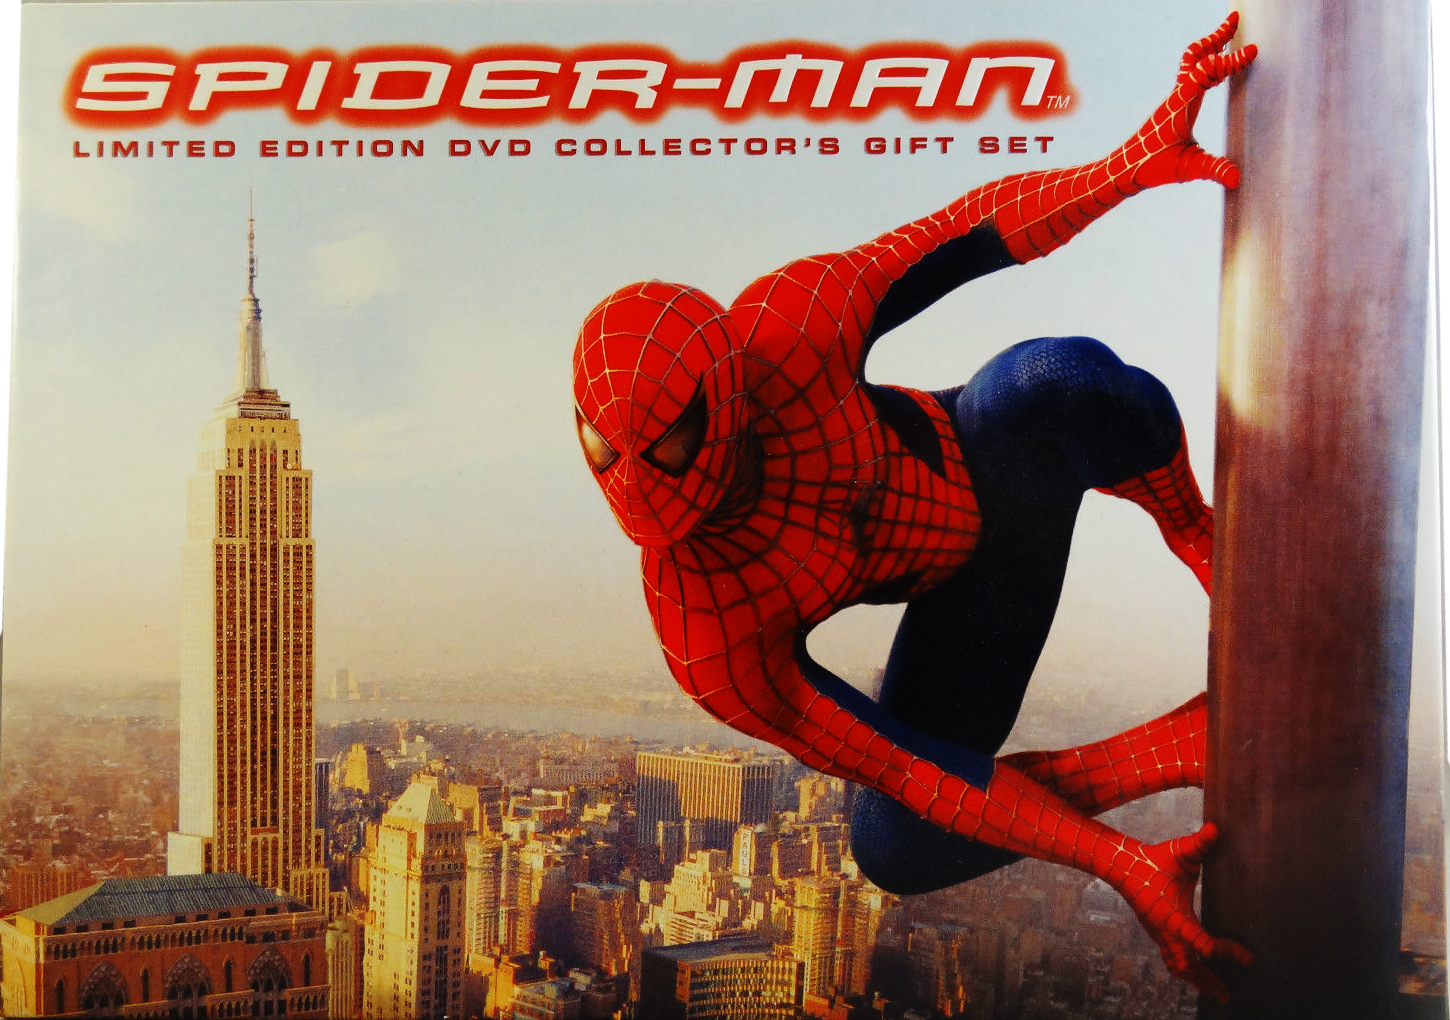 Spider-Man Limited Edition